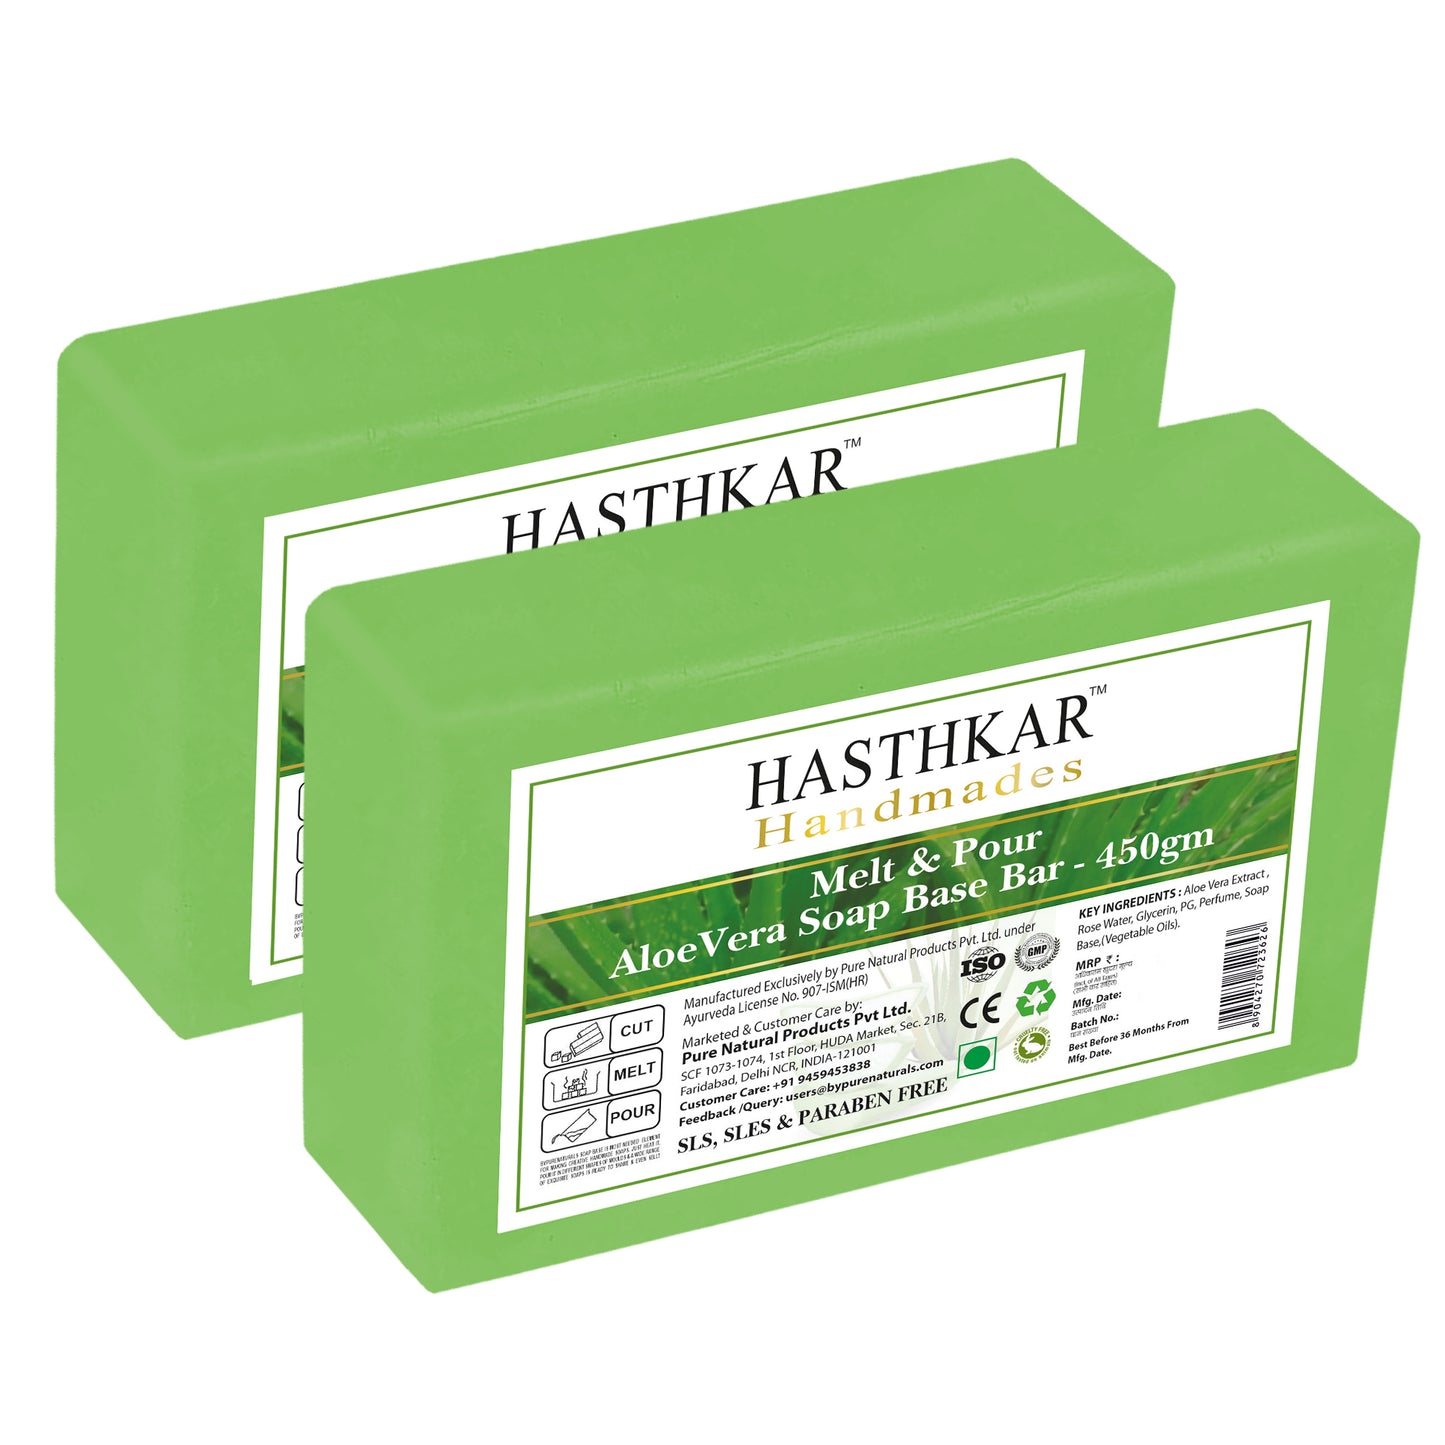 Hasthkar Handmades Aloevera SLS Paraben Free Soap base (pack of 2) 450gm